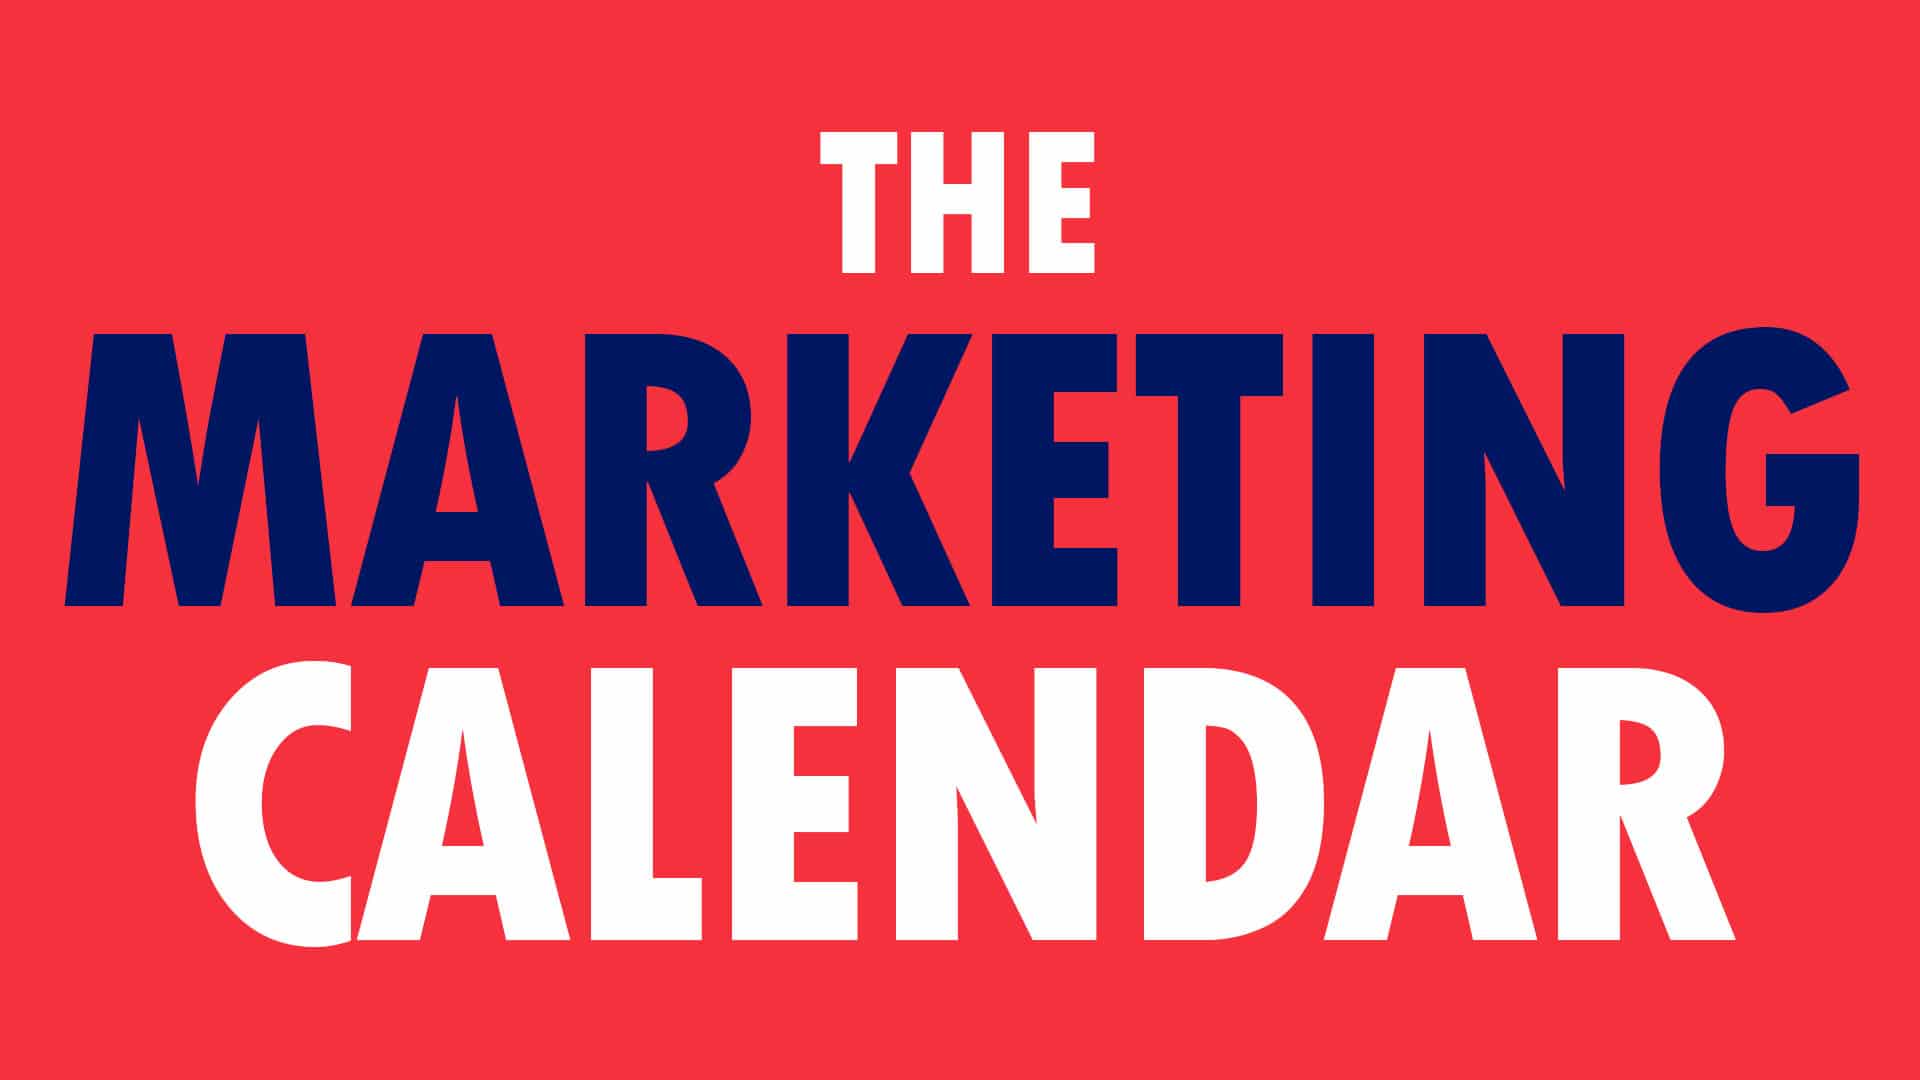 The Marketing Calendar